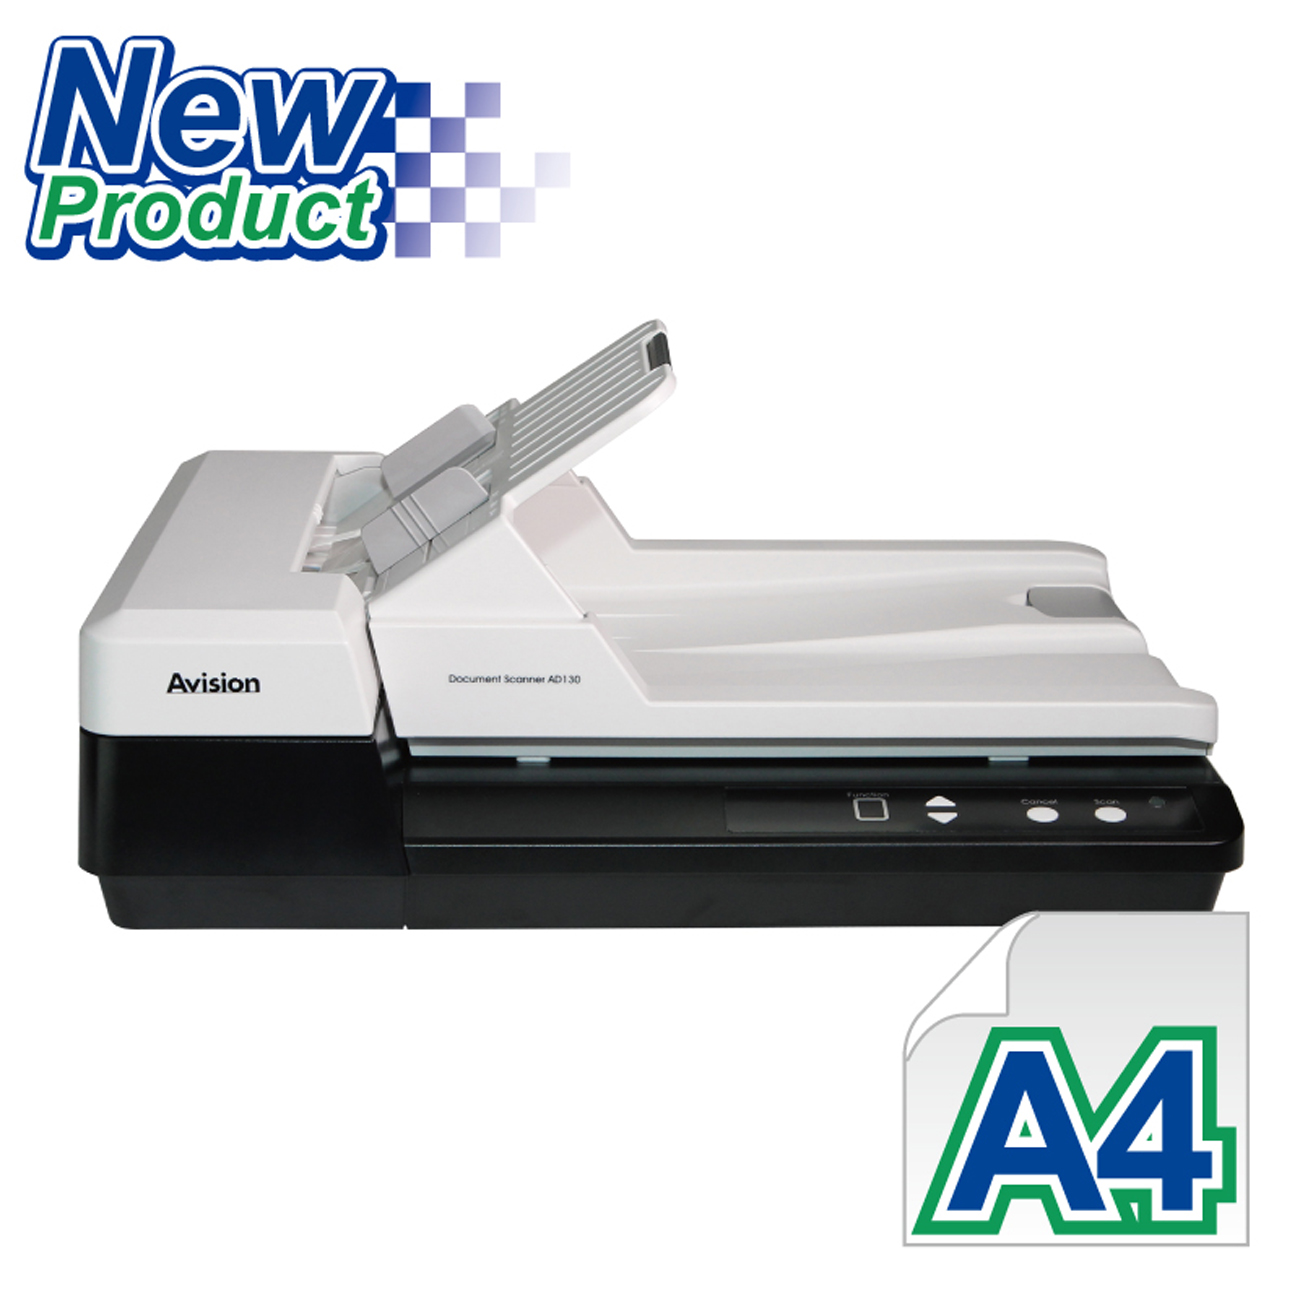 Avision Dokumentenscanner AD130 A4 Duplex - DF-1701B